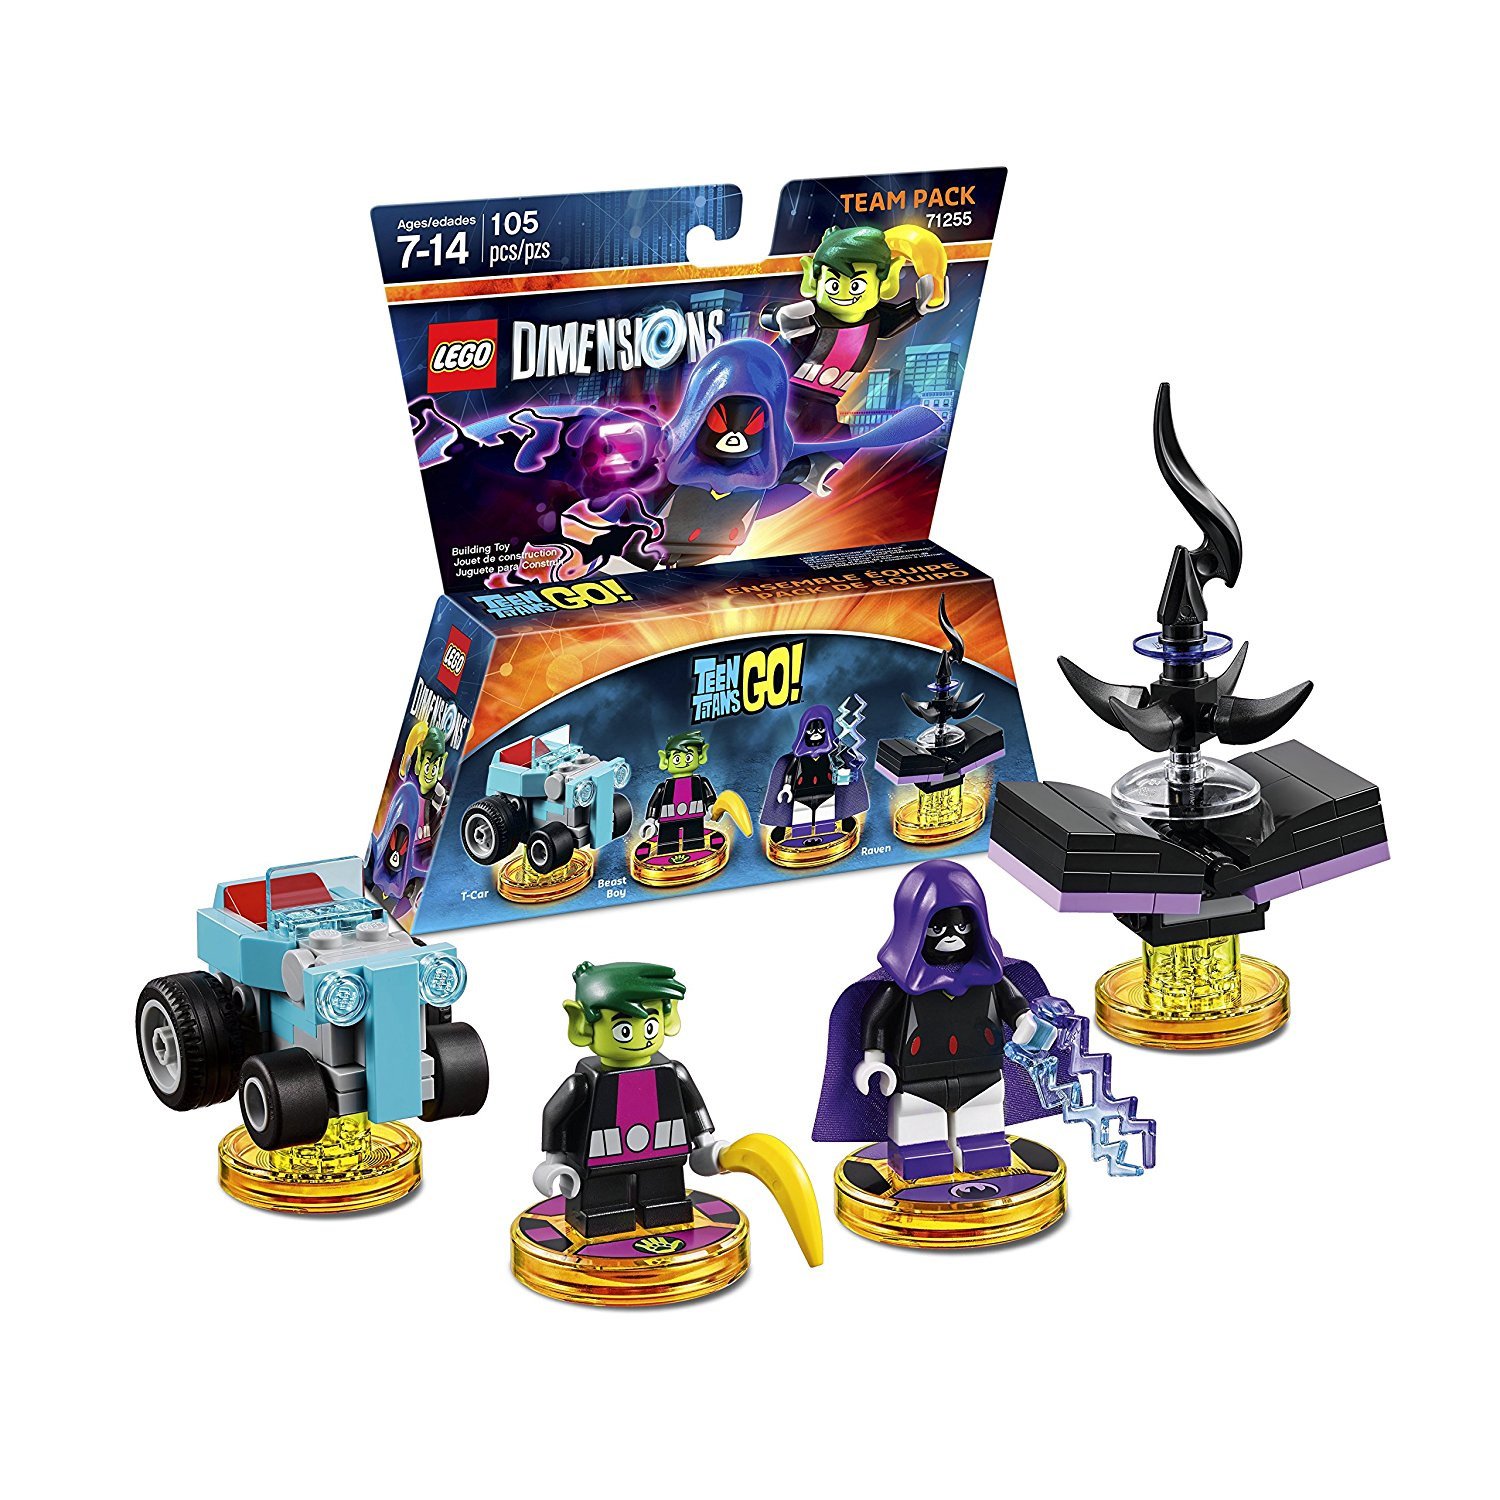 LEGO Dimensions - Team Pack (71255) - Teen Titans Go! (Beast Boy, Raven, T-Car, Ravens Spellbook)